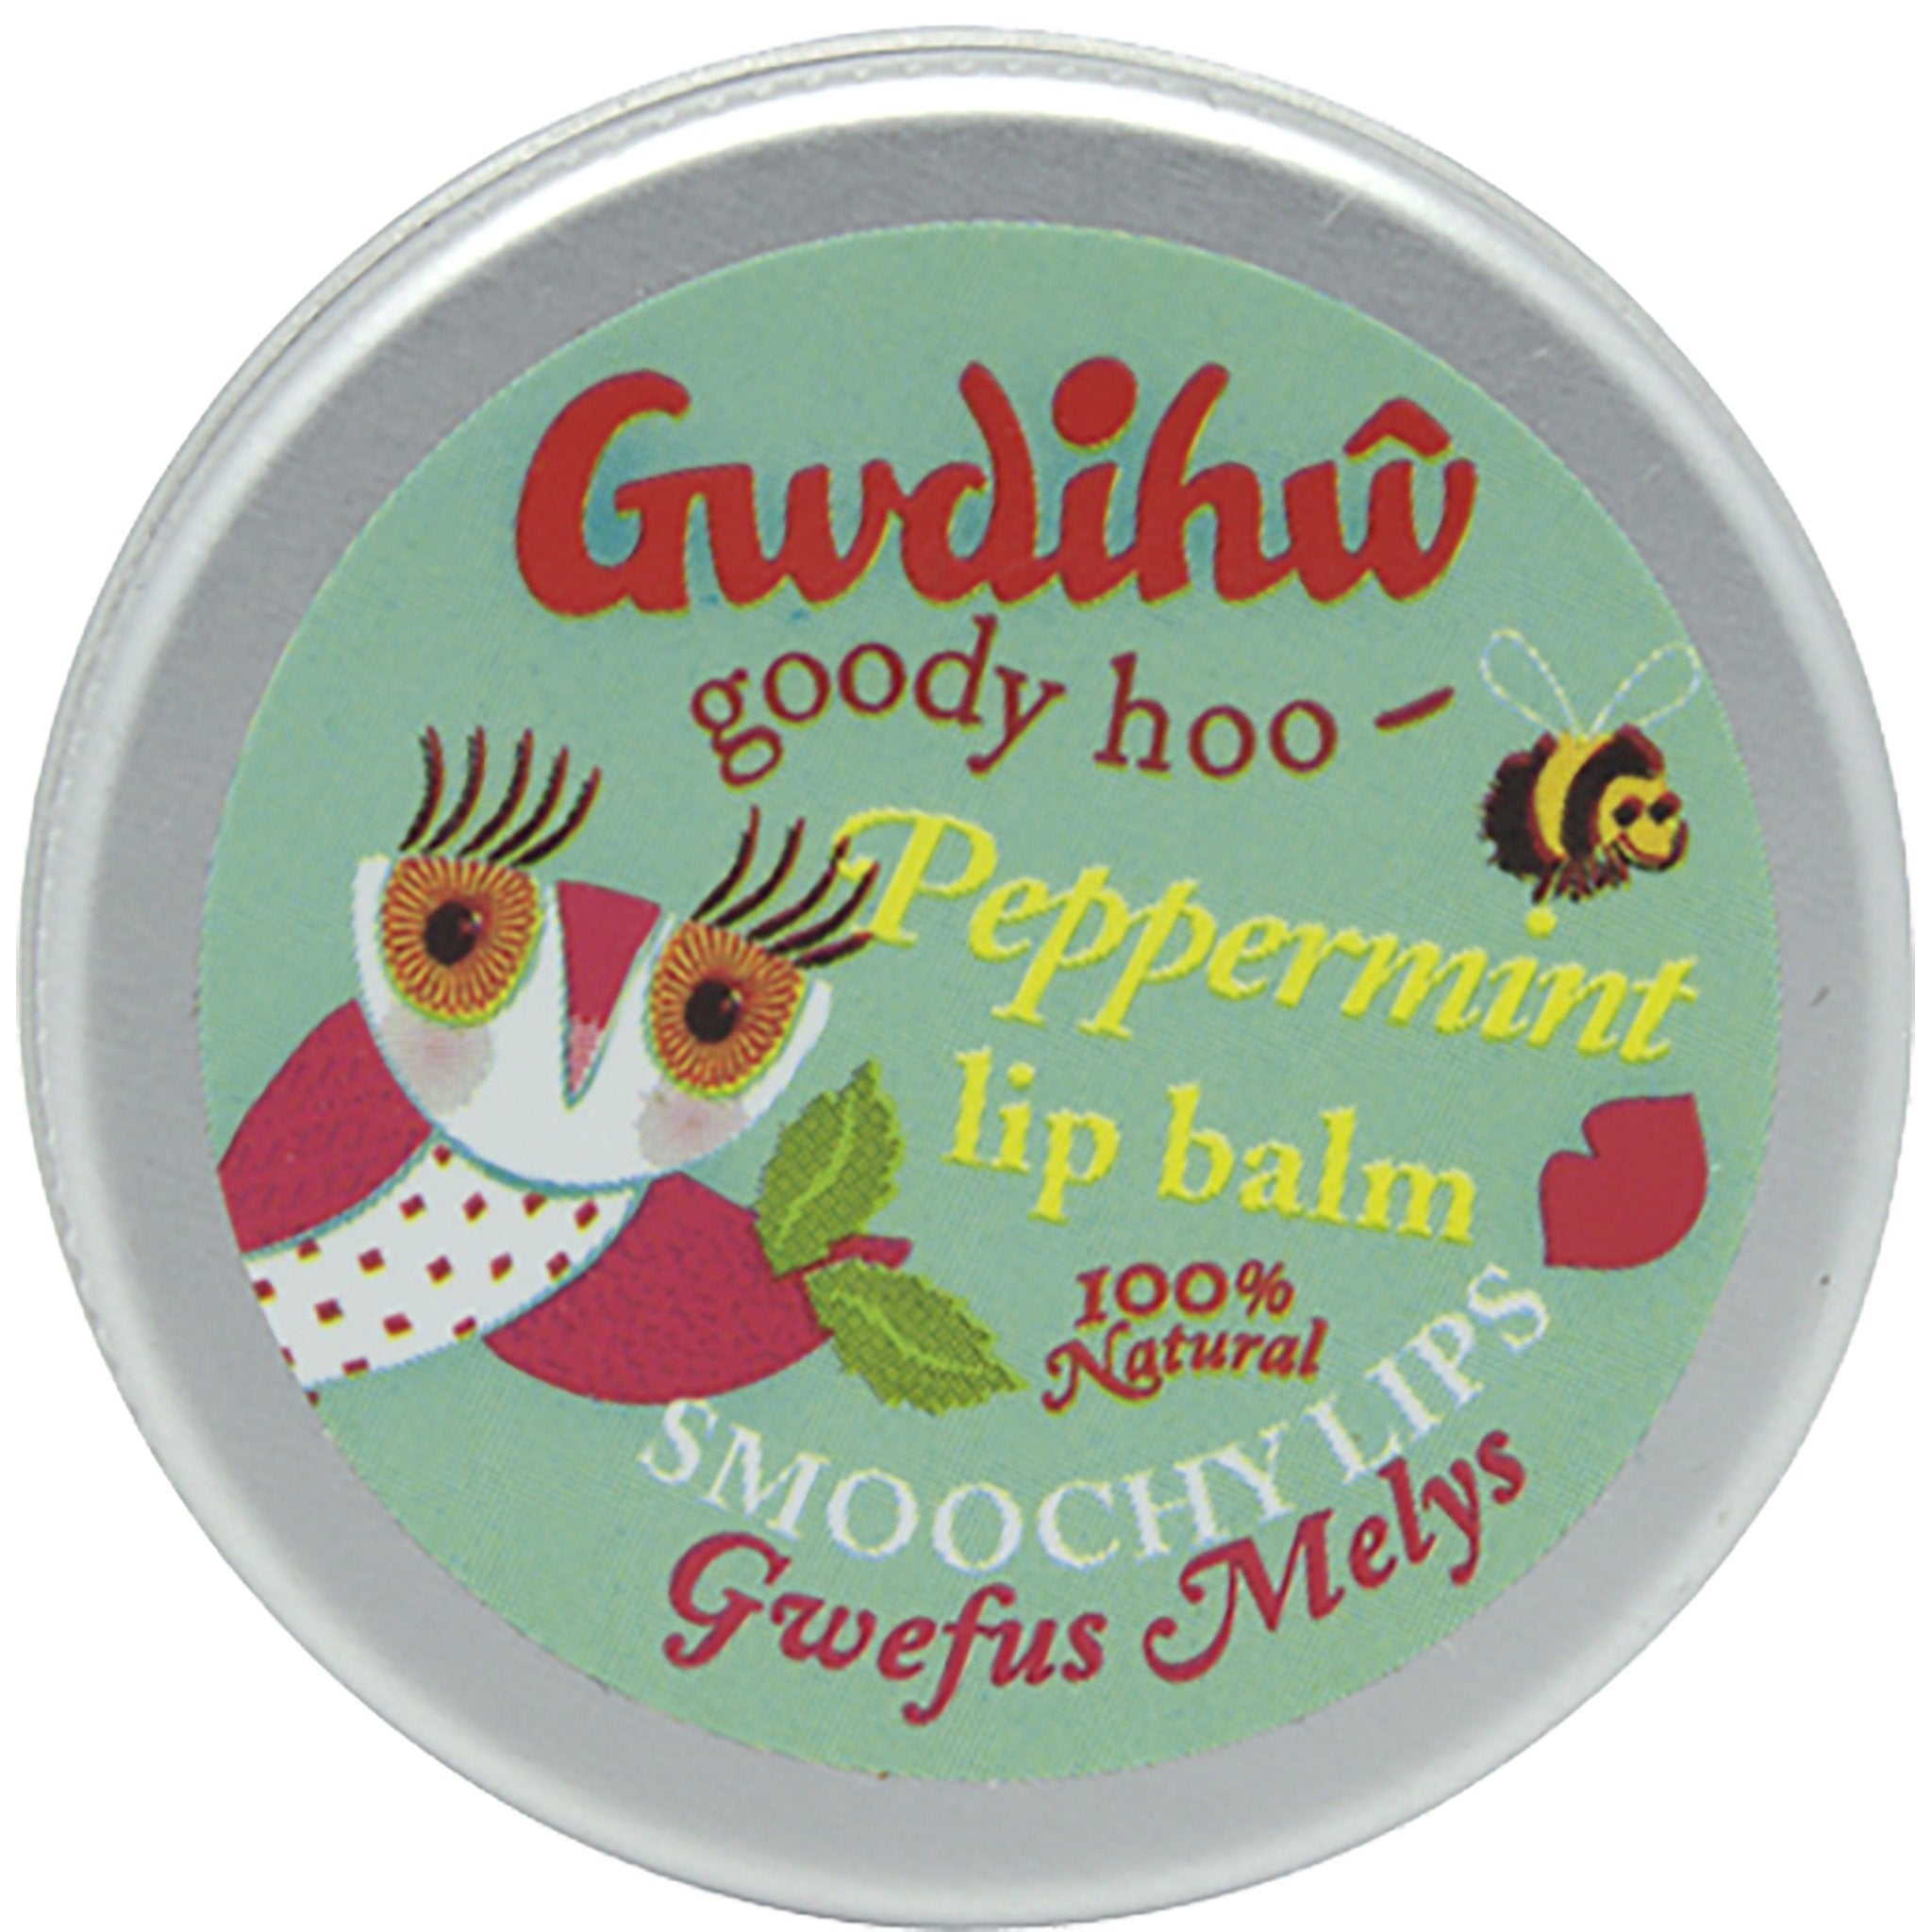 Peppermint Smoochy Lips Balm - mypure.co.uk